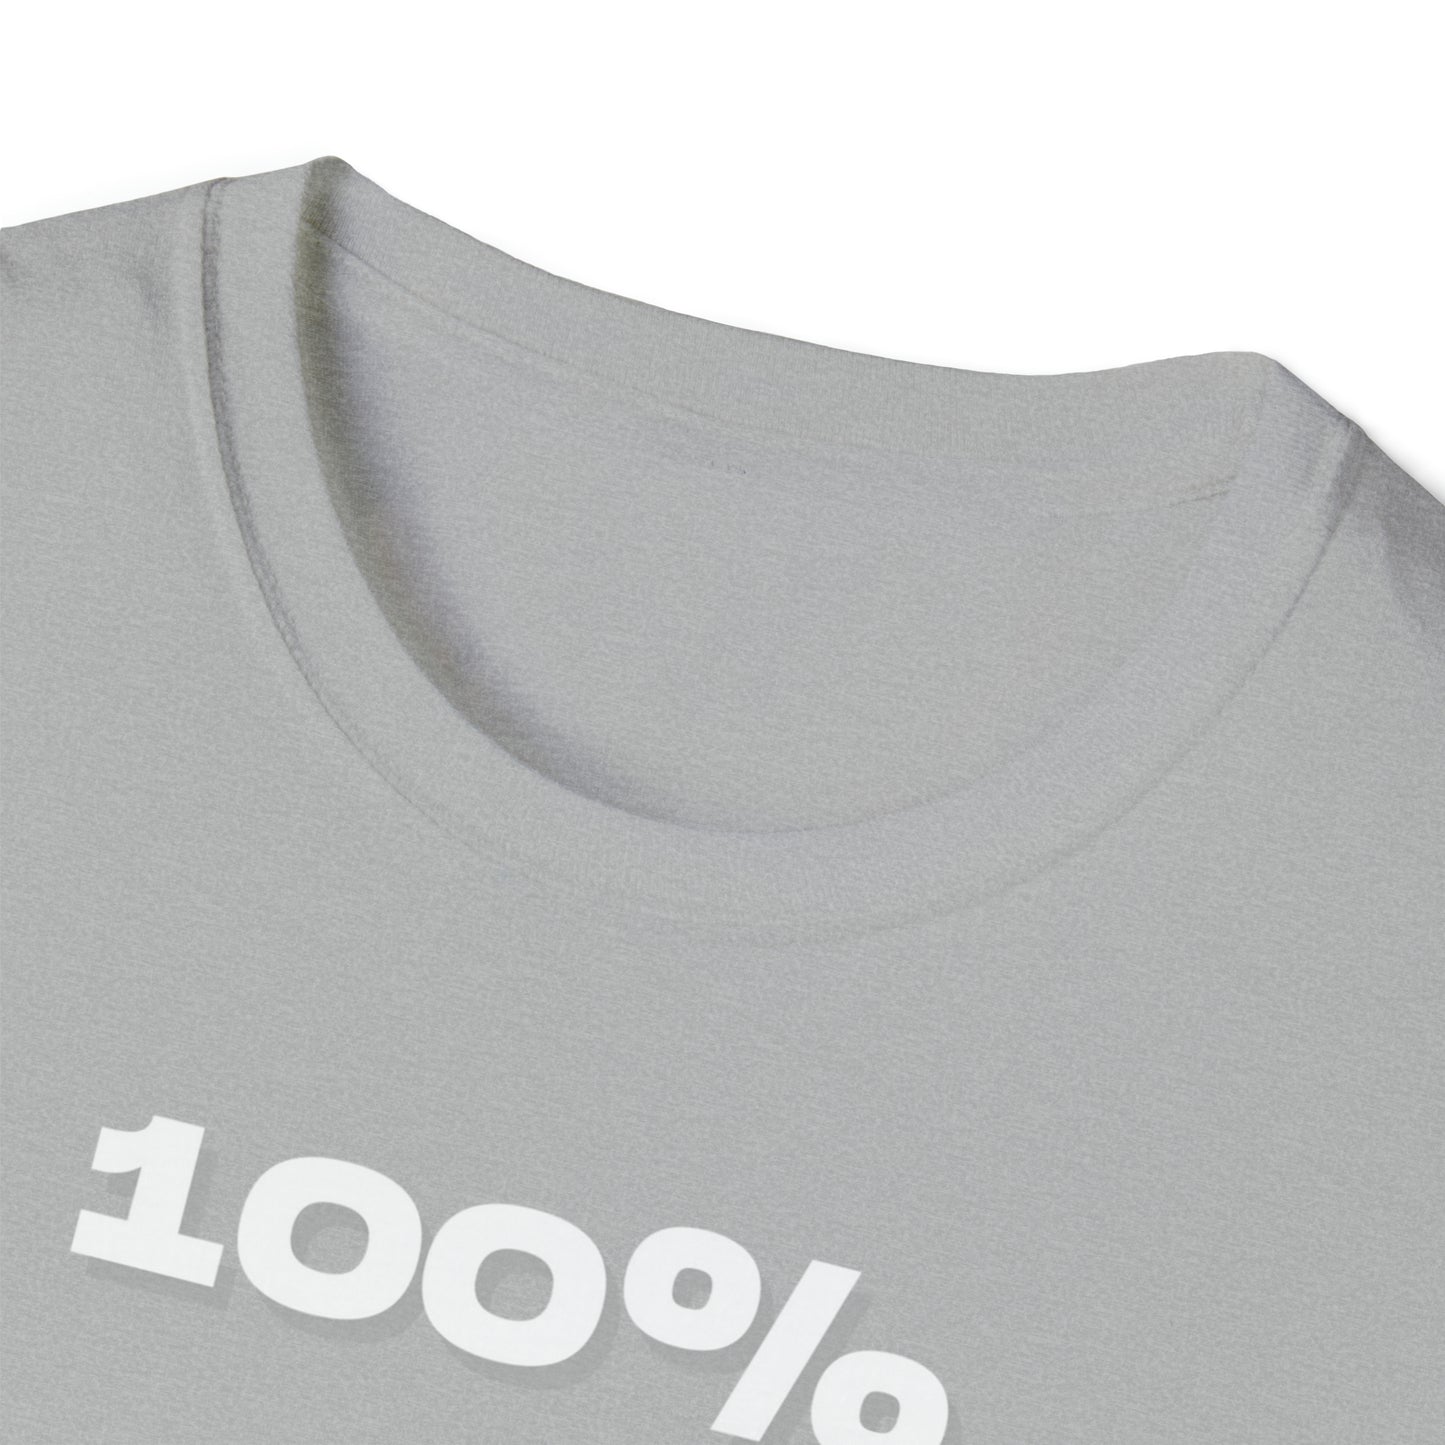 100% Natural Steroids T-Shirt